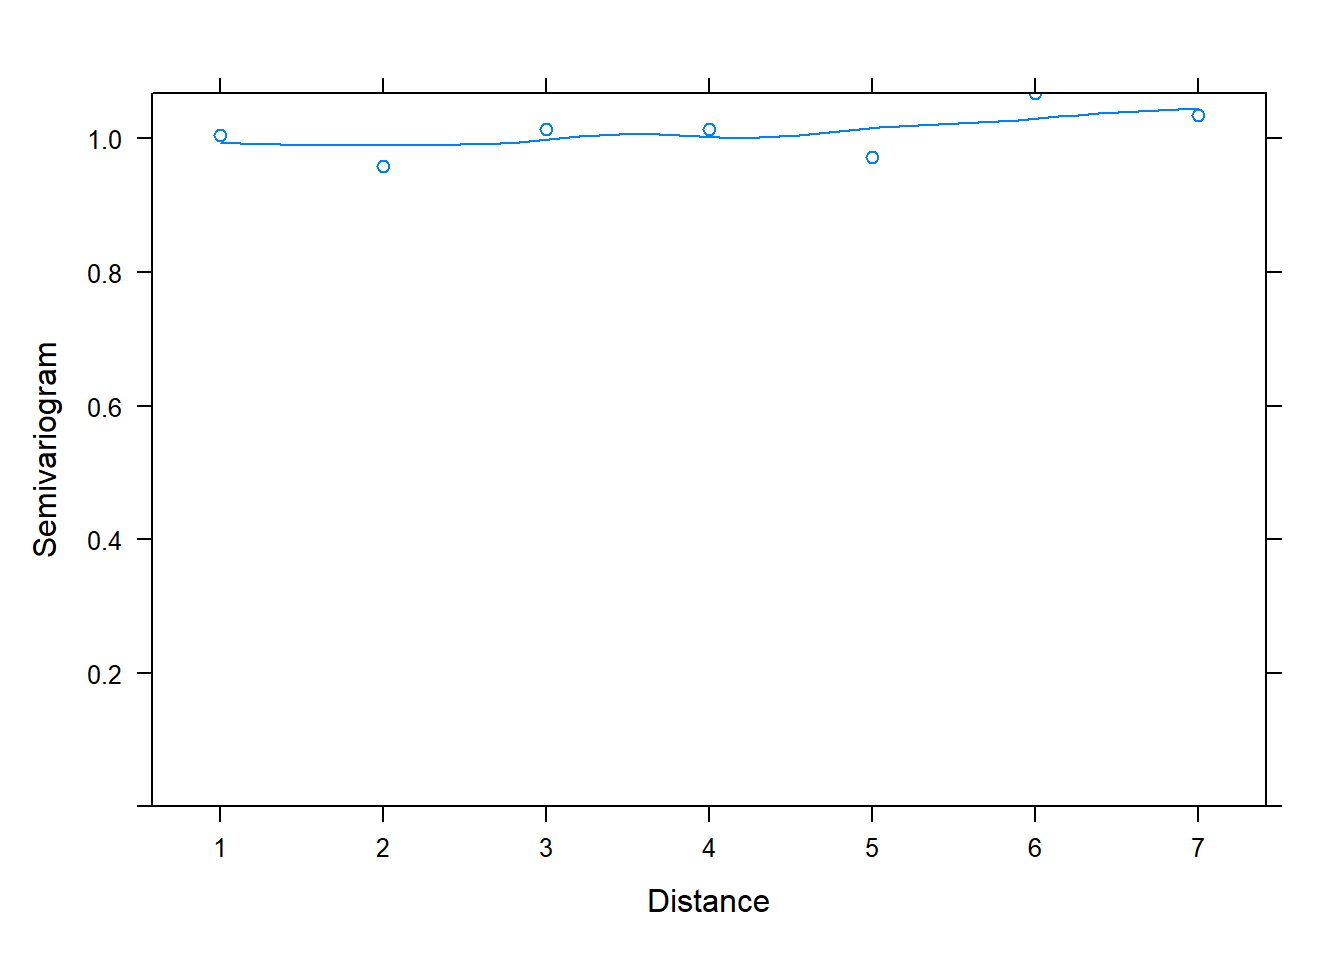 semivariogram plot showing no correlation between residuals, indicating the model is adequate.